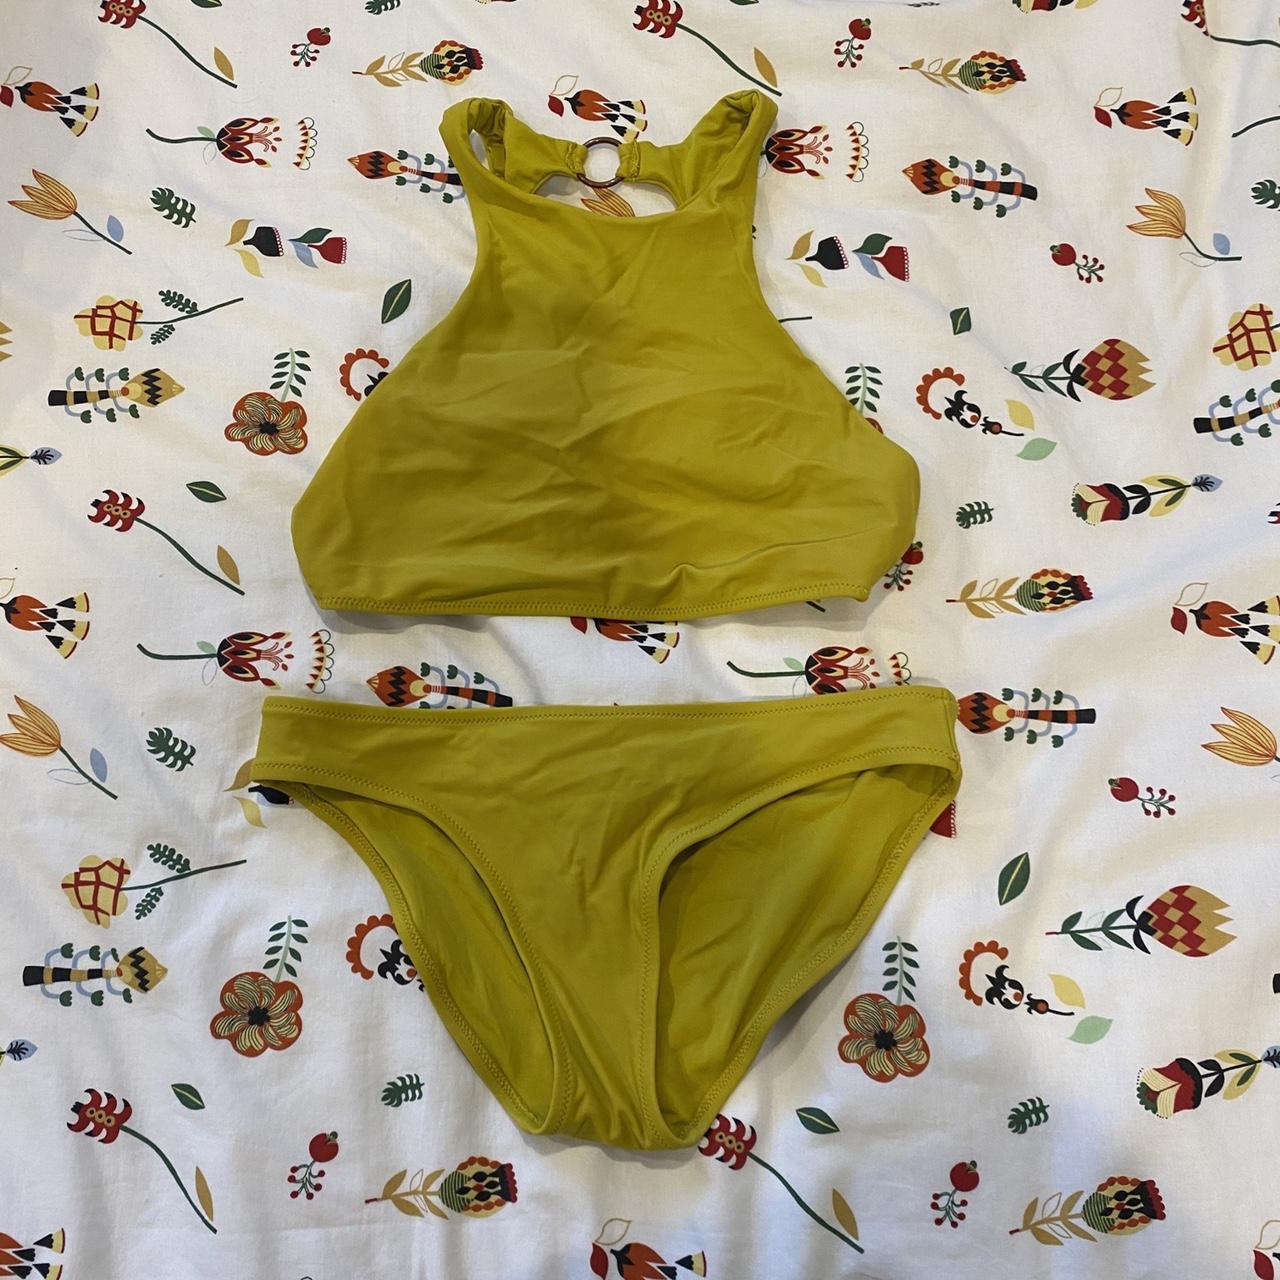 Aries Women's Yellow and Green Bikinis-and-tankini-sets